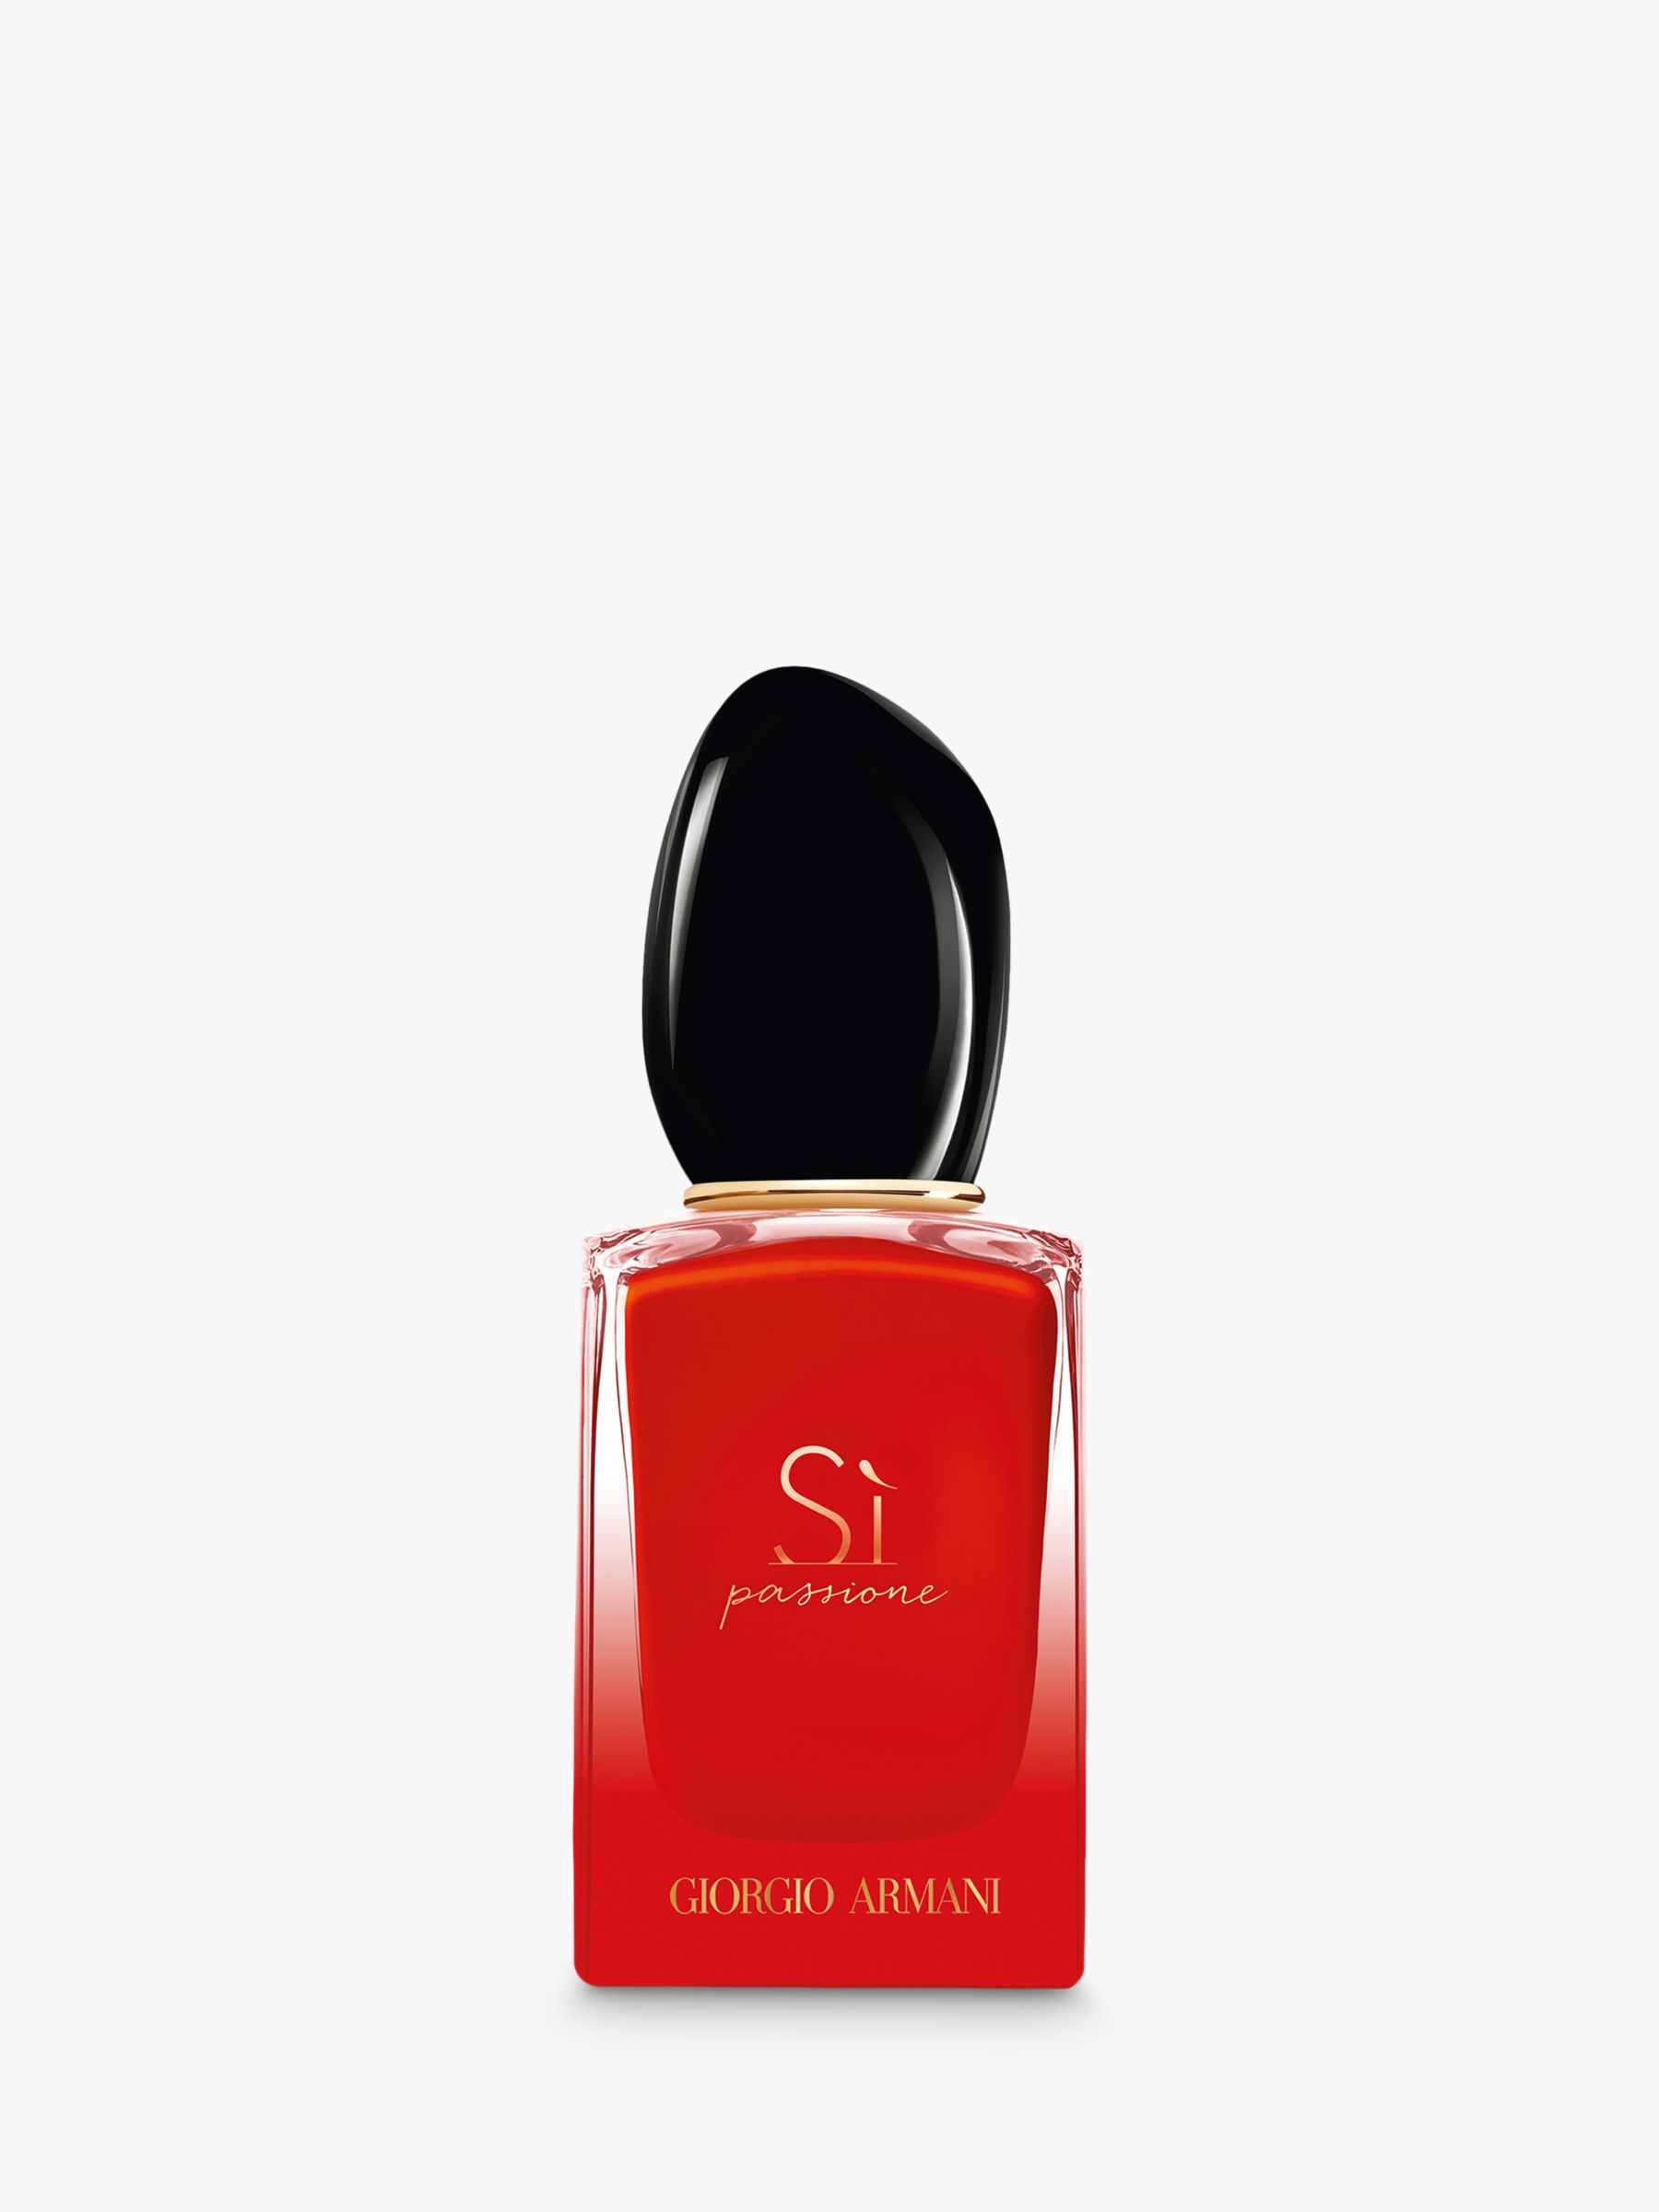 Giorgio Armani Si Passione Eau De Parfum Intense, 30ml at John Lewis &  Partners